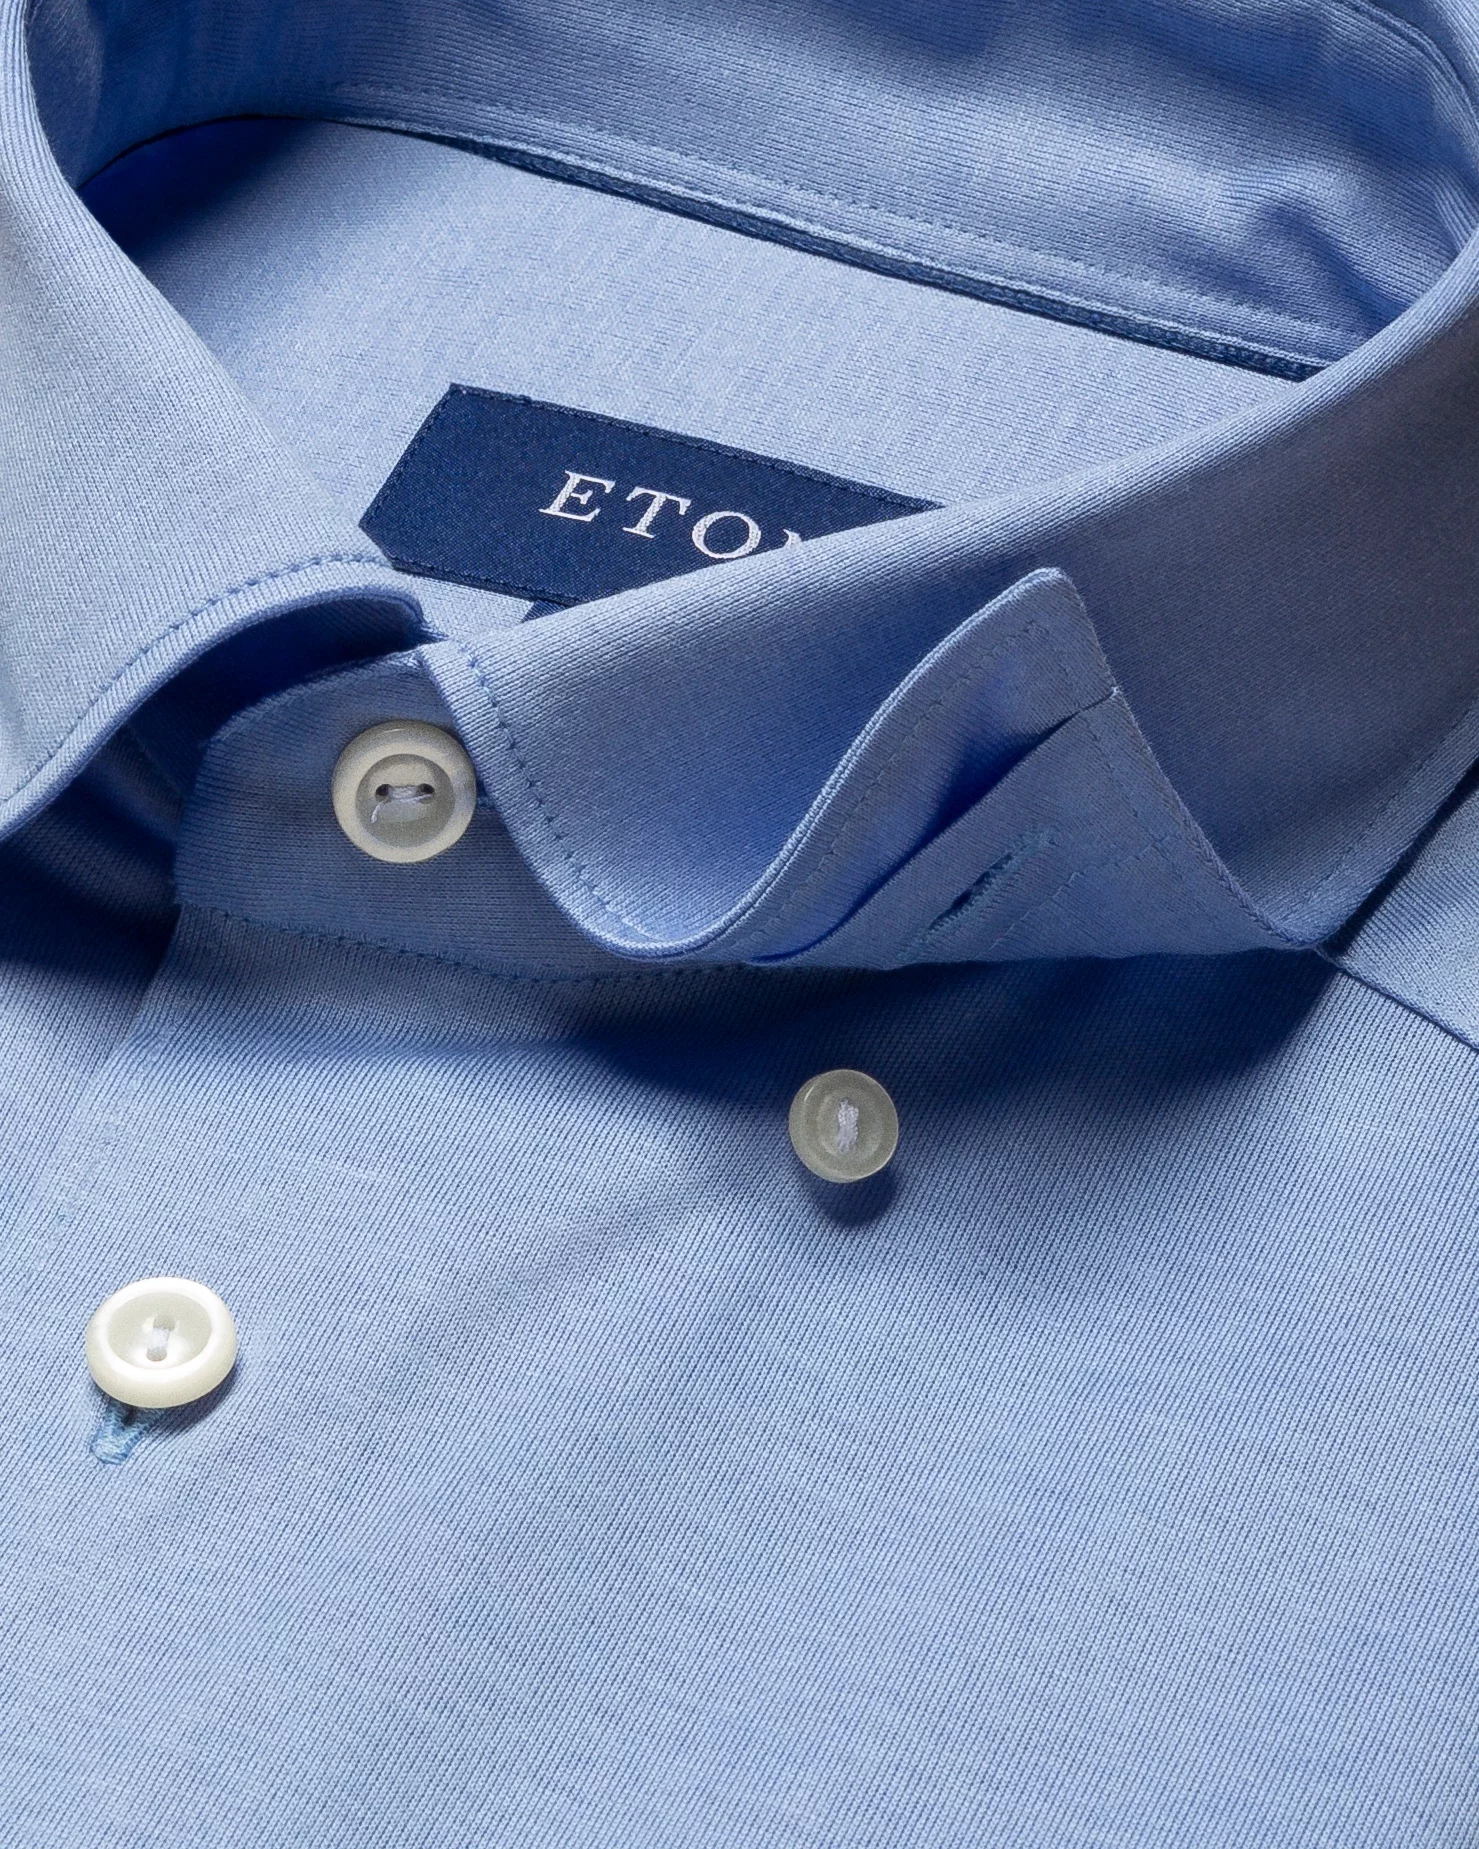 Eton - mid blue jersey shirt